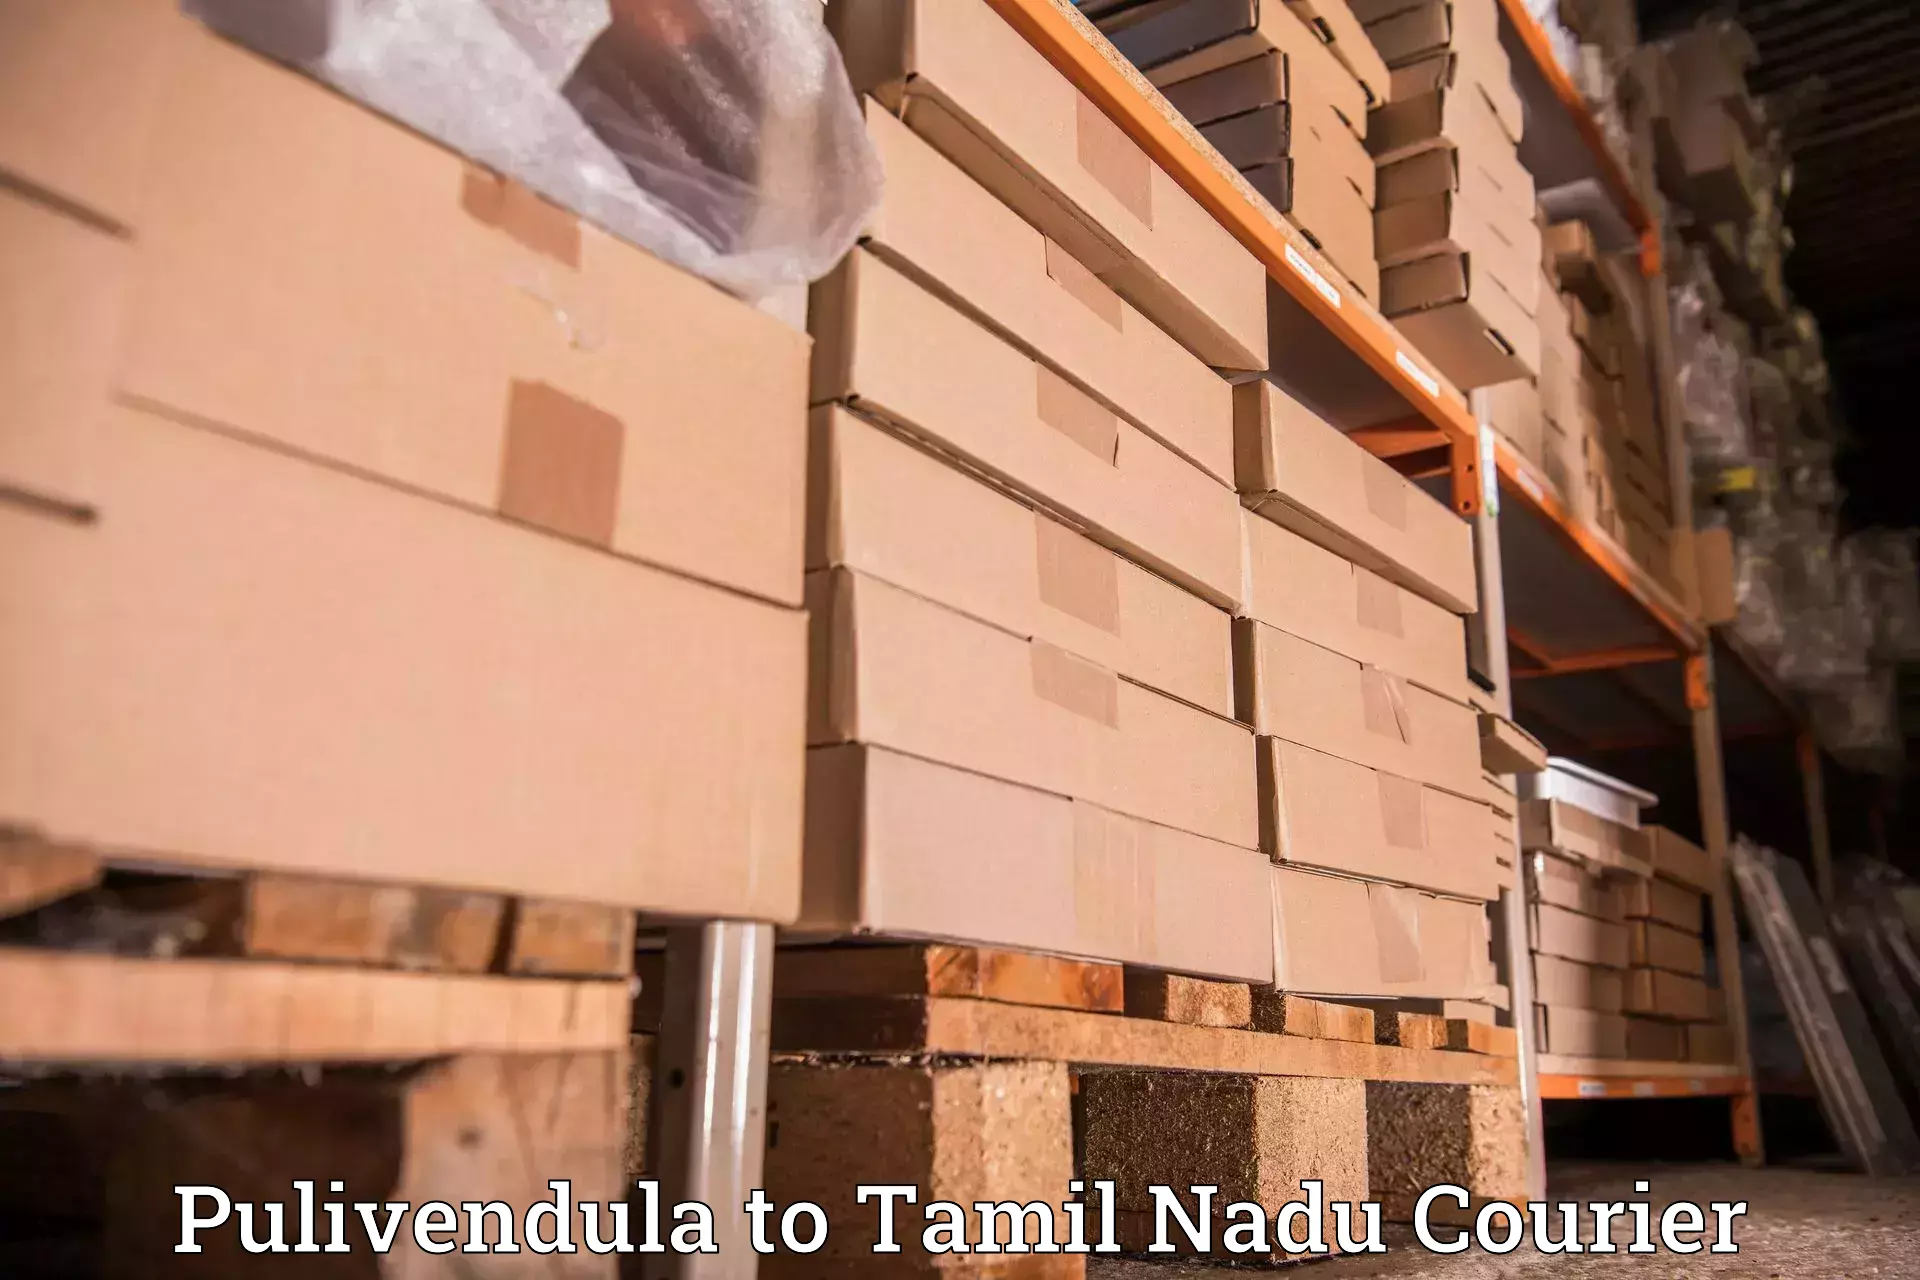 User-friendly delivery service Pulivendula to Anna University Chennai